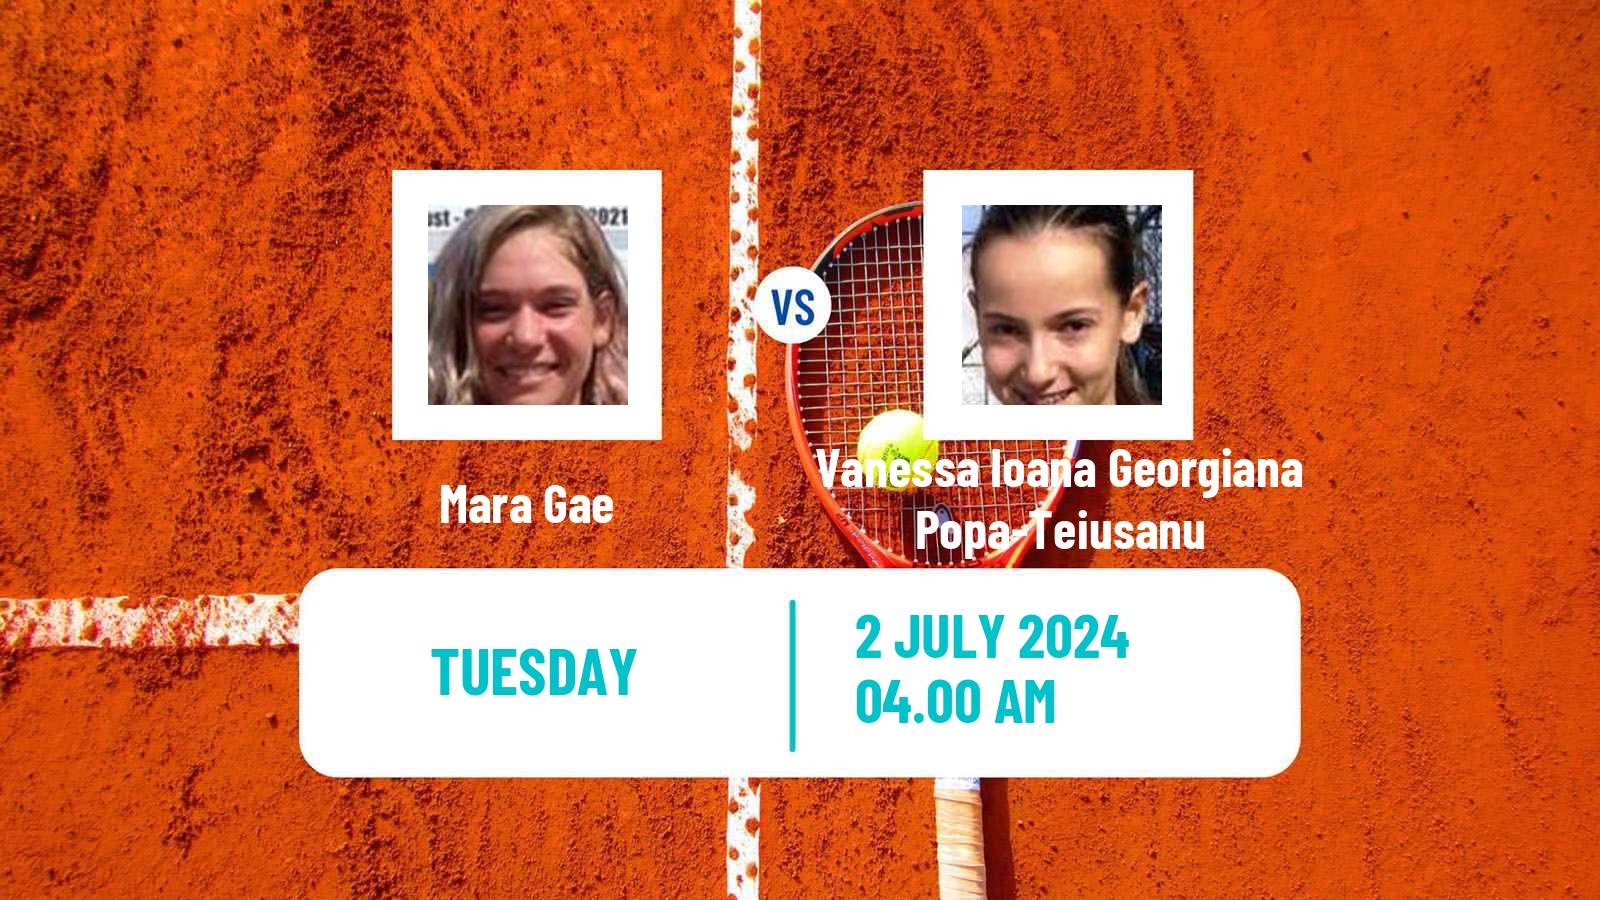 Tennis ITF W15 Galati 2 Women Mara Gae - Vanessa Ioana Georgiana Popa-Teiusanu